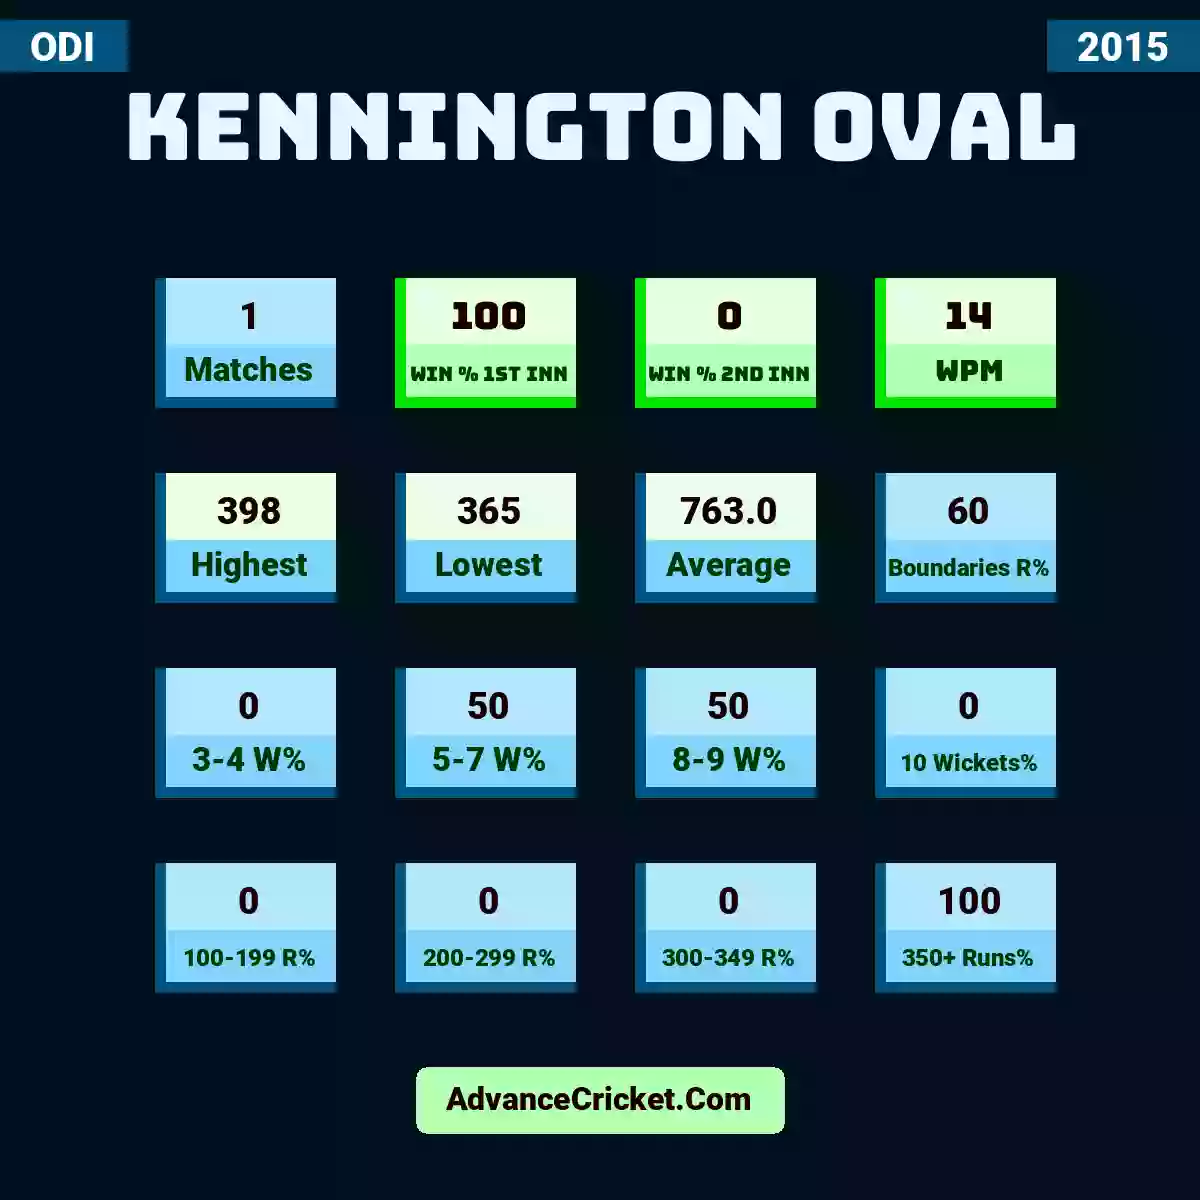 Image showing Kennington Oval with Matches: 1, Win % 1st Inn: 100, Win % 2nd Inn: 0, WPM: 14, Highest: 398, Lowest: 365, Average: 763.0, Boundaries R%: 60, 3-4 W%: 0, 5-7 W%: 50, 8-9 W%: 50, 10 Wickets%: 0, 100-199 R%: 0, 200-299 R%: 0, 300-349 R%: 0, 350+ Runs%: 100.